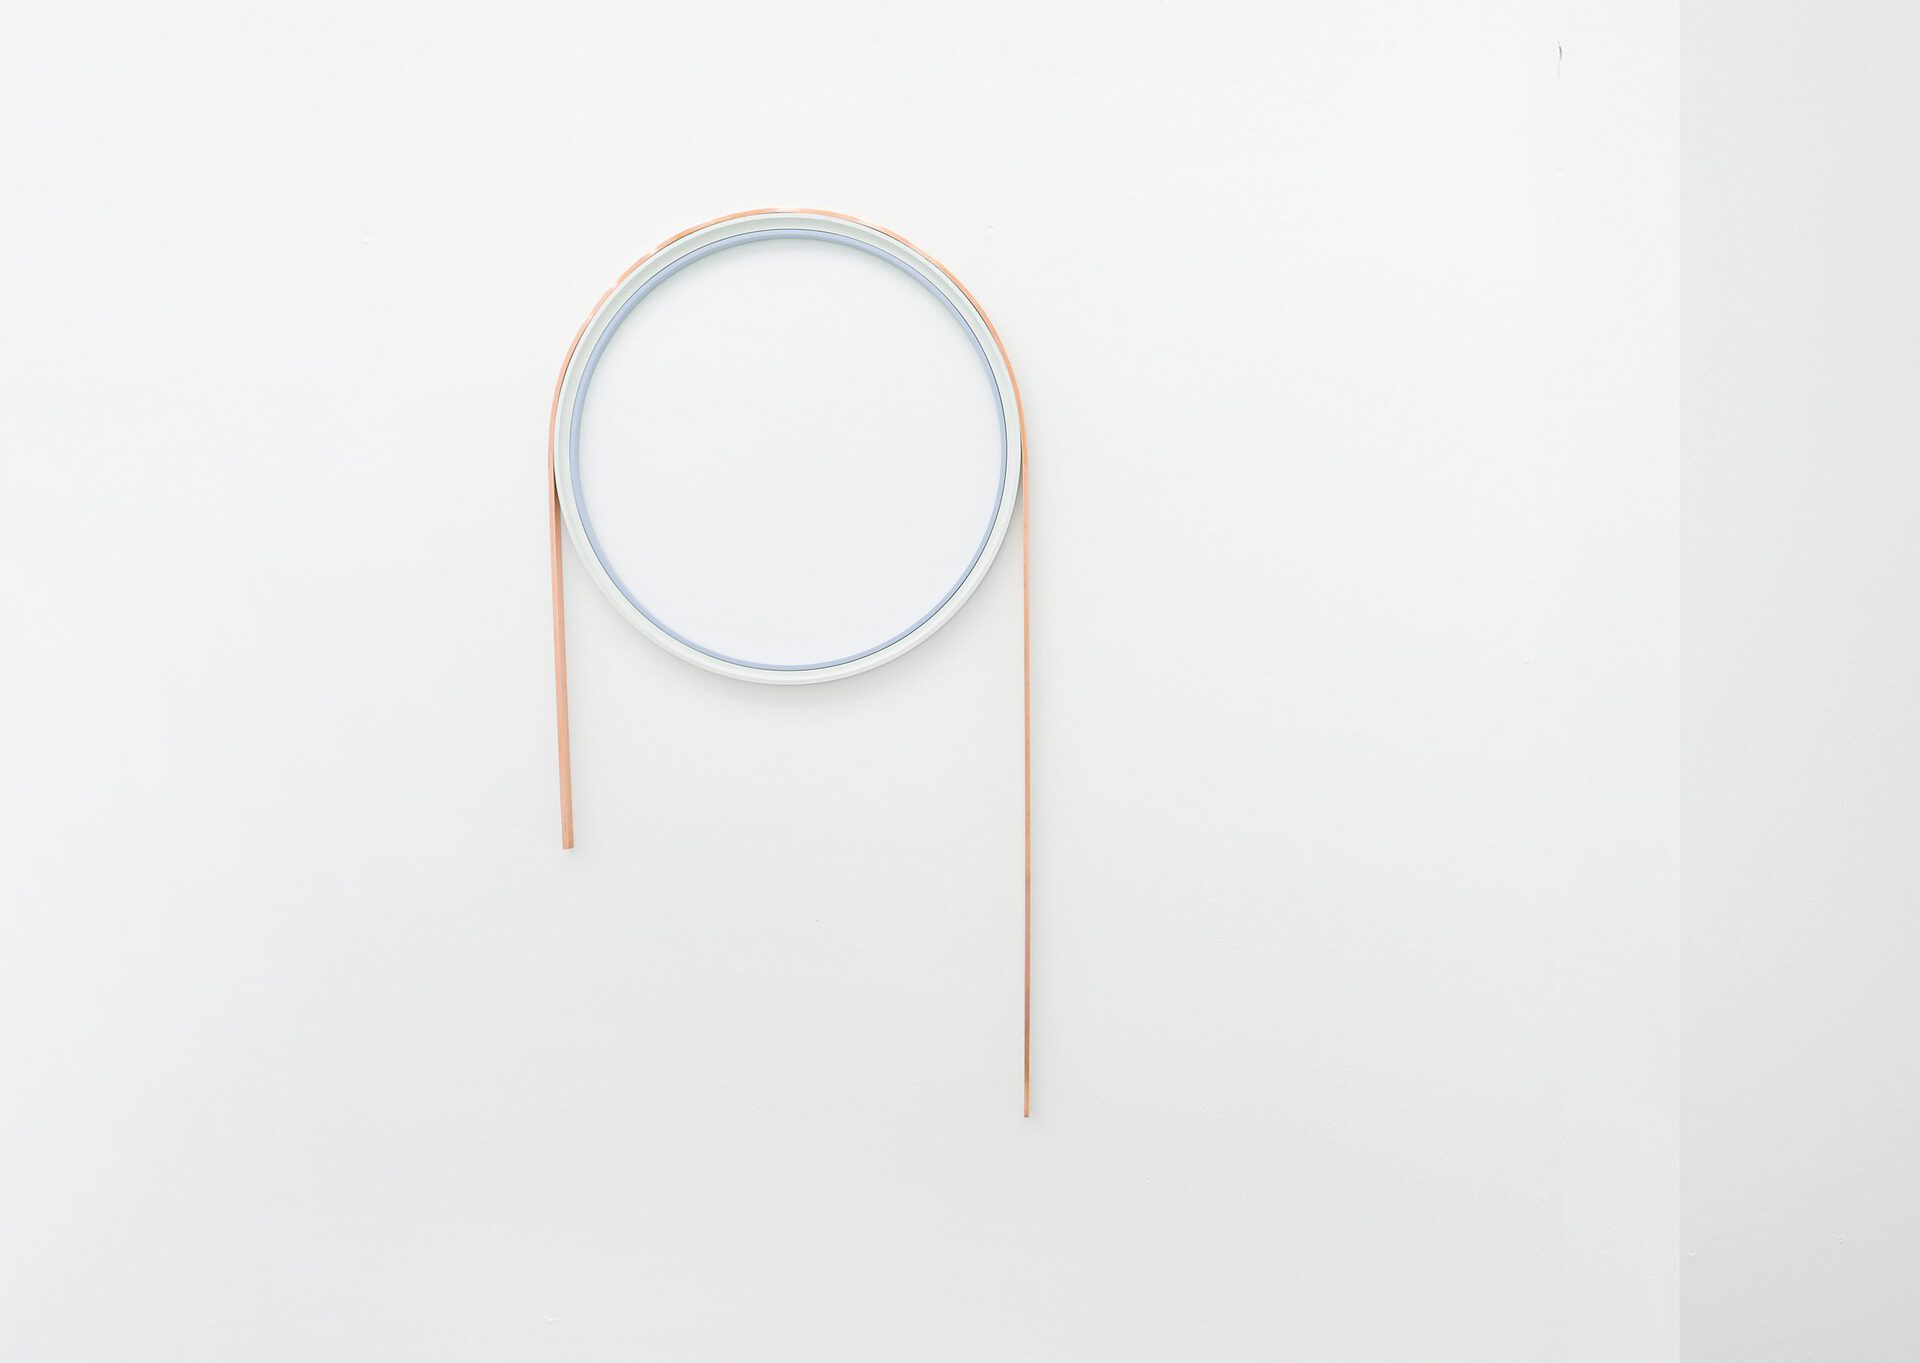 Nina Laaf, amalthea, 2021, plaster, steel, copper, lacquer, 99 x 53 cm